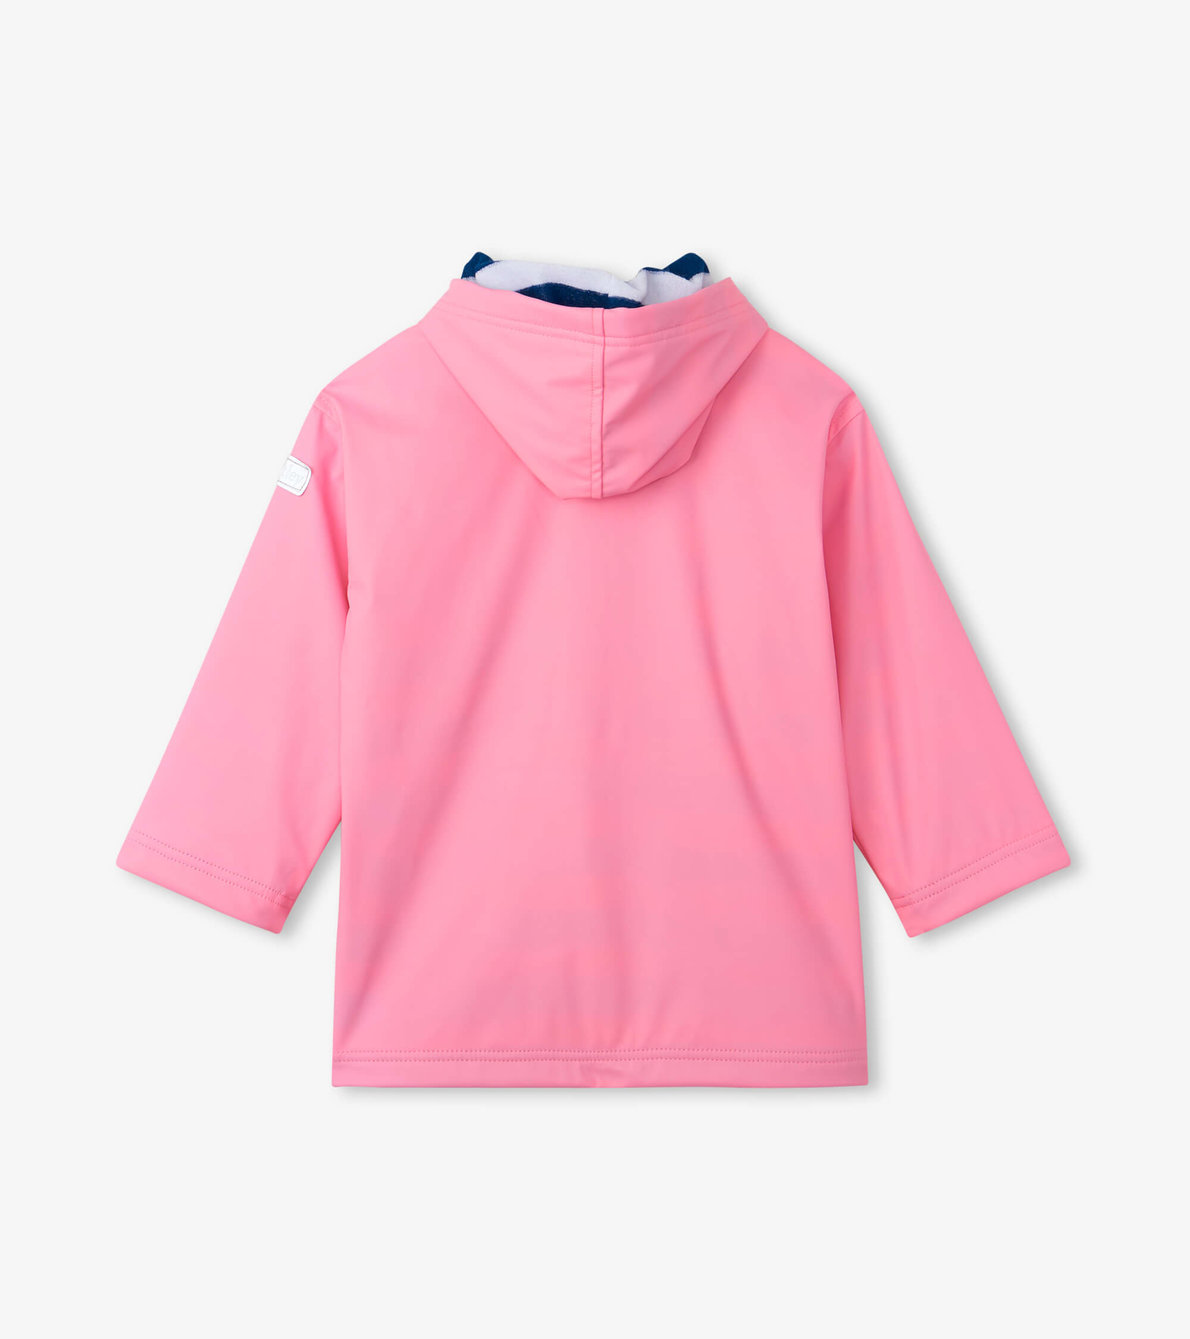 View larger image of Classic Pink Zip Up Splash Jacket